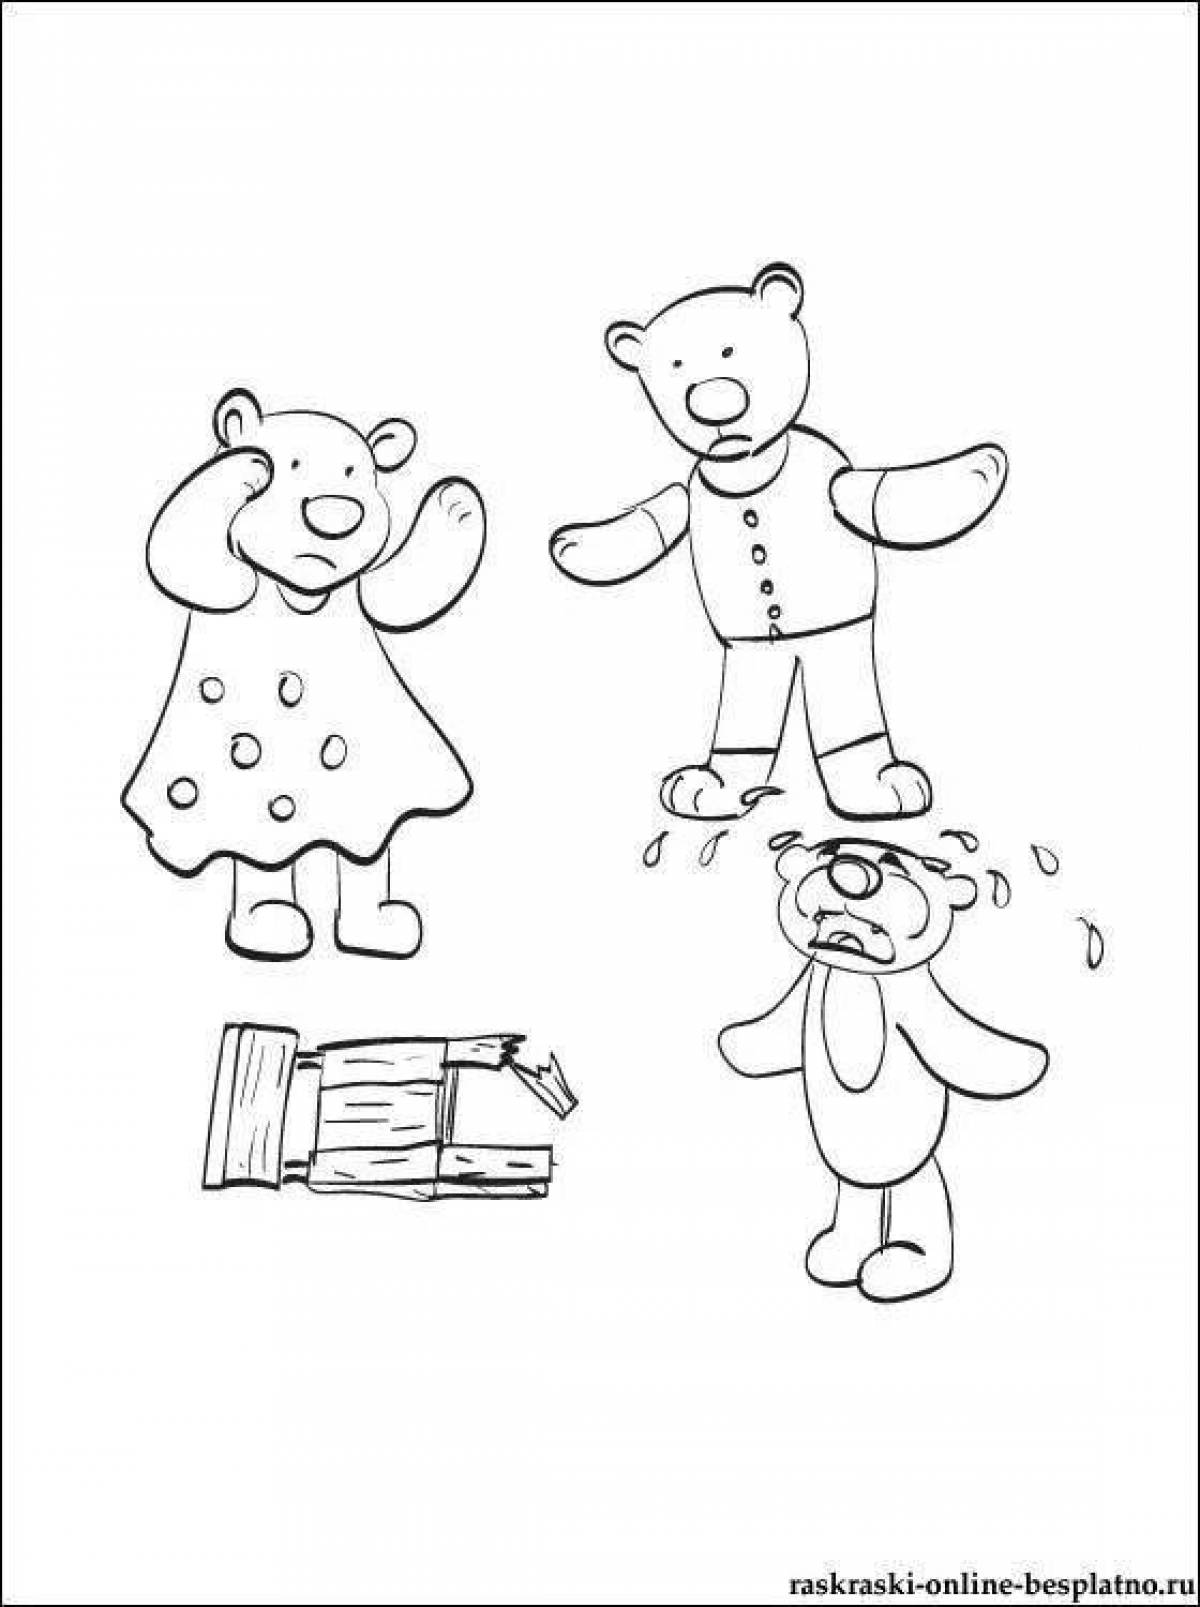 Три медведя рисунок